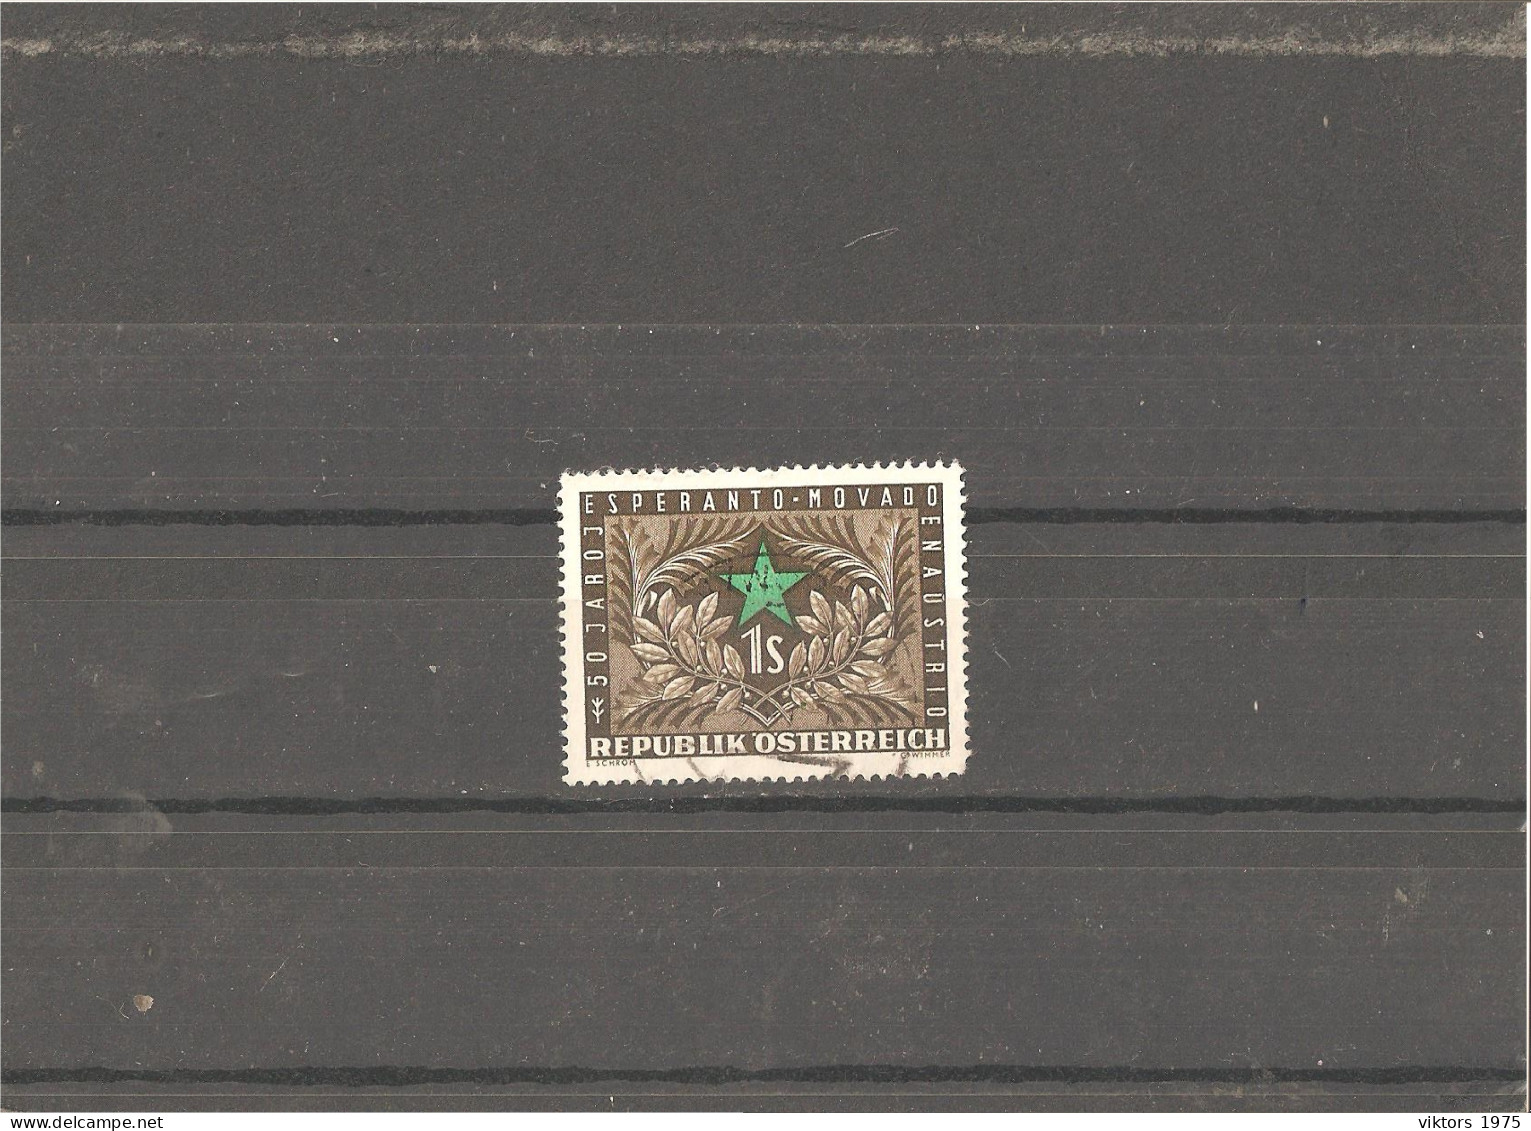 Used Stamp Nr.1005 In MICHEL Catalog - Gebraucht